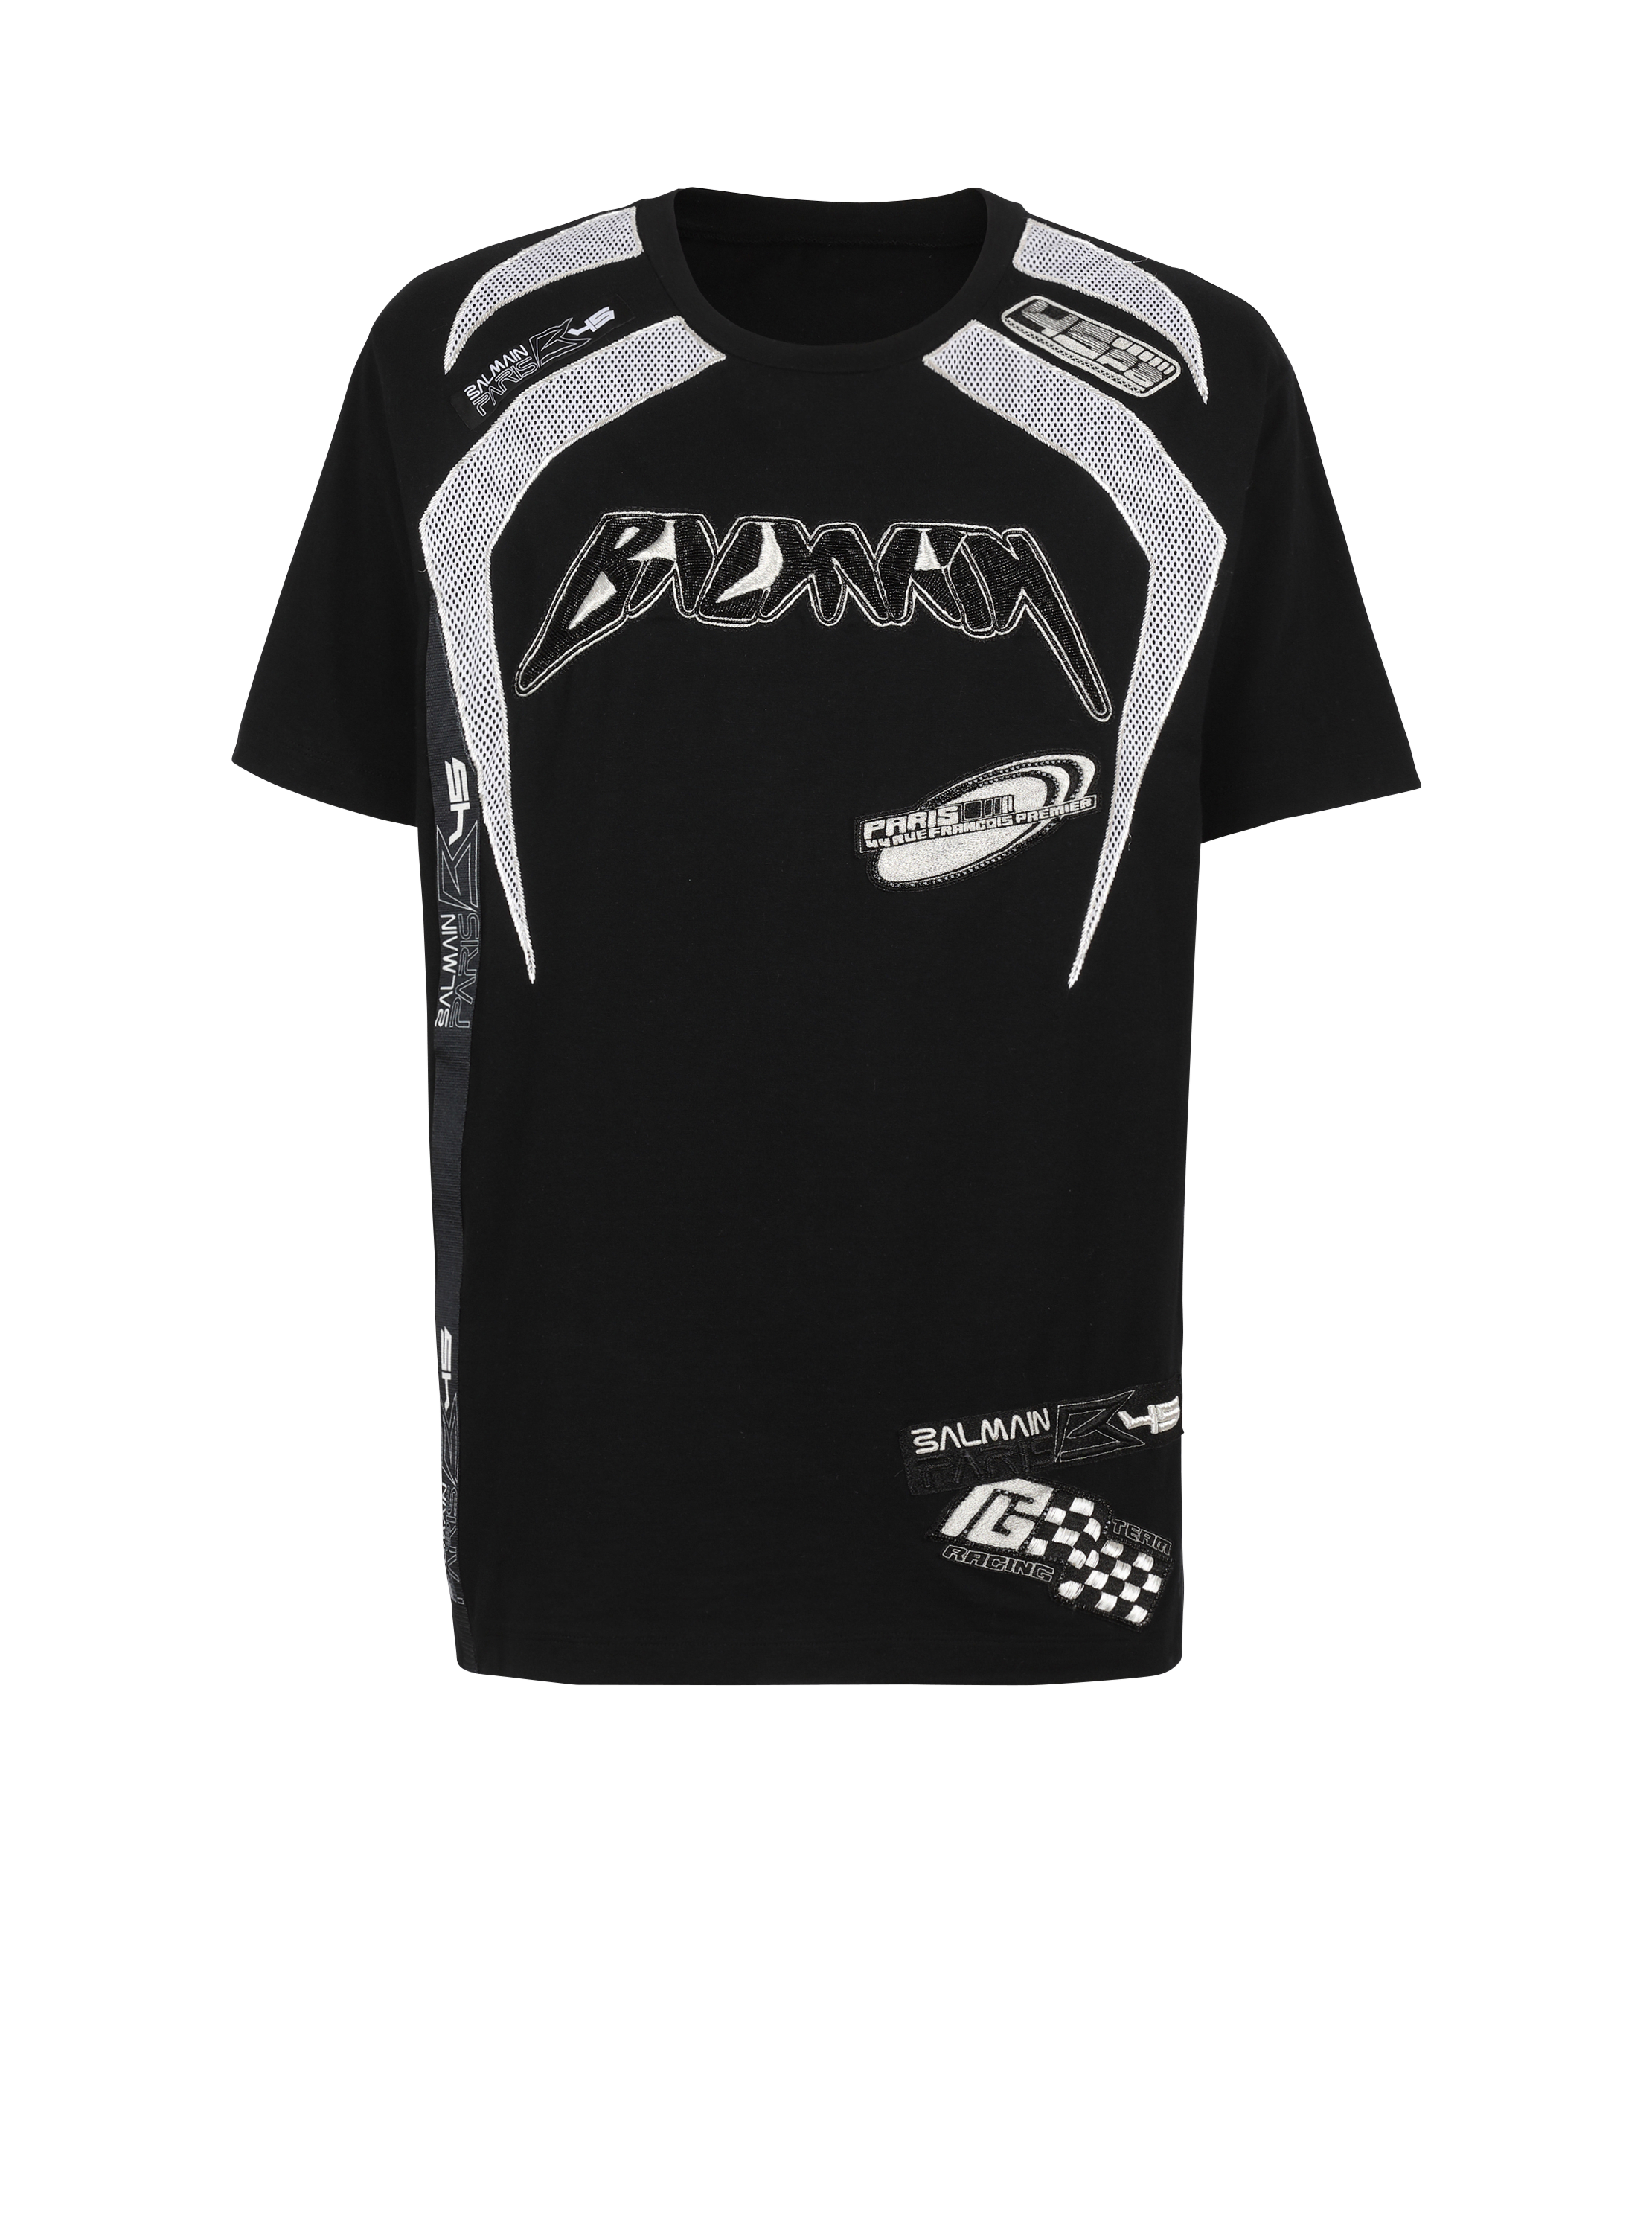 Cotton T-shirt with embroidered Balmain logo, black, hi-res